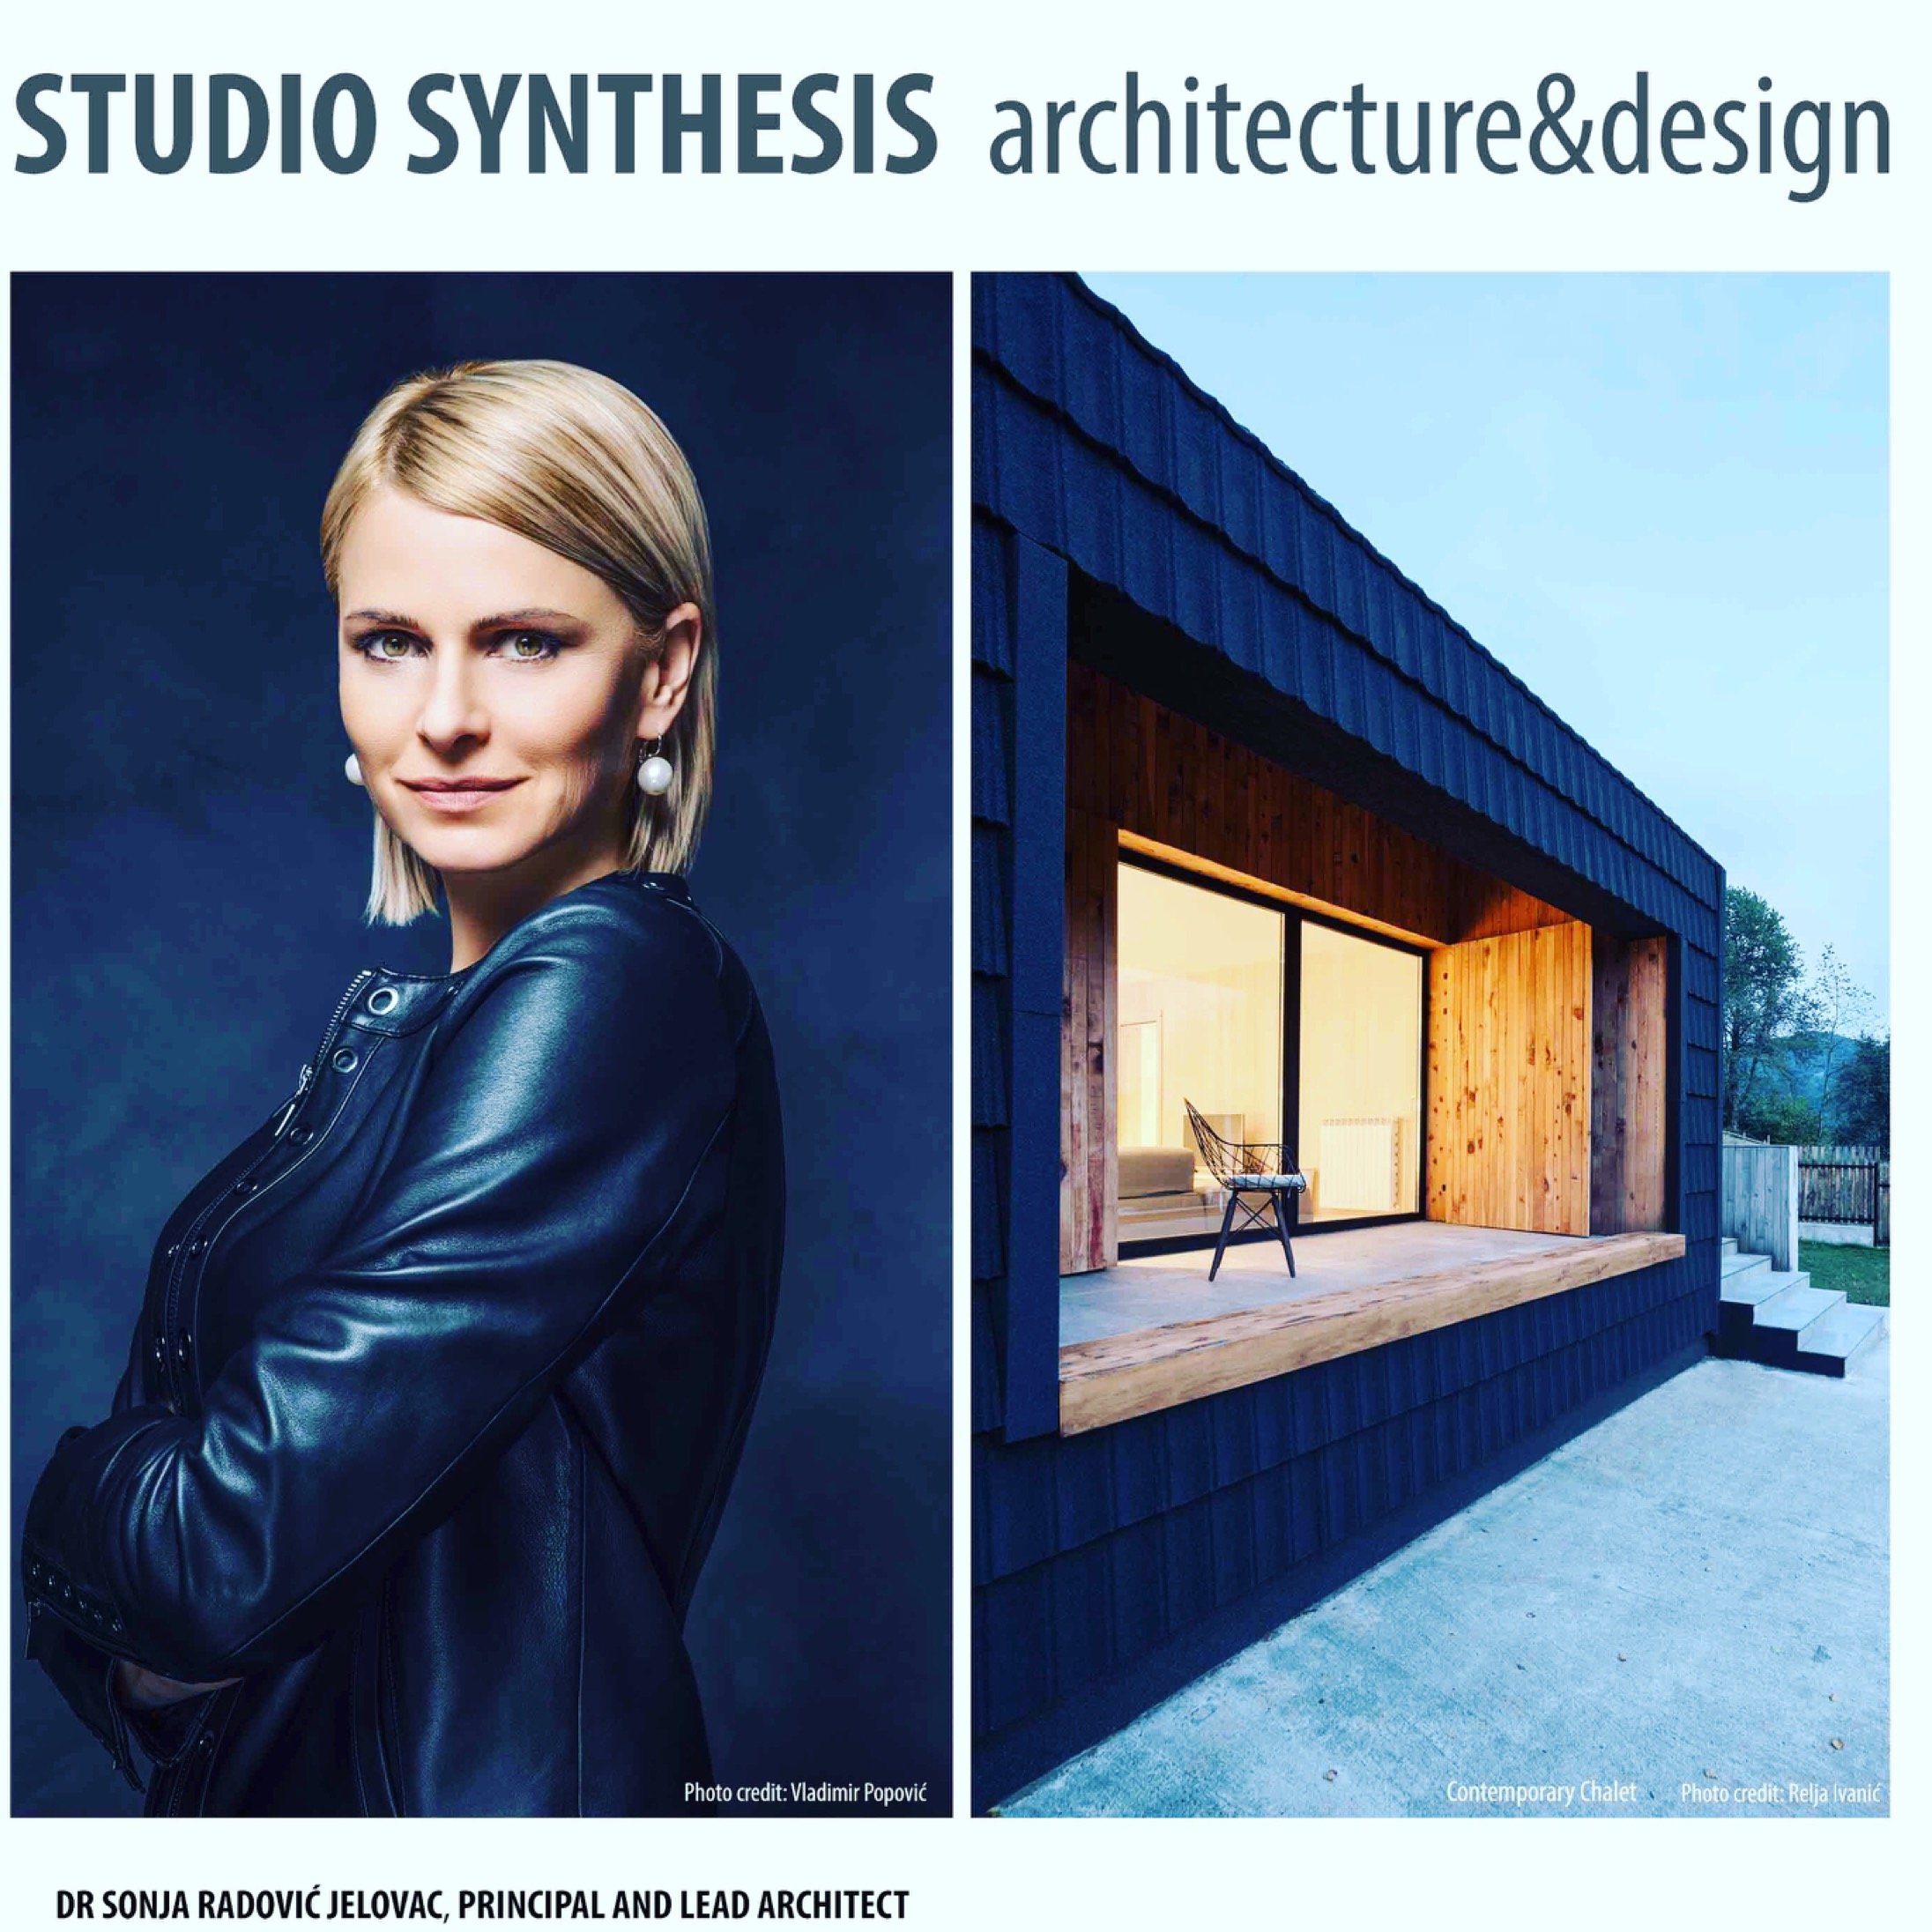 Phd in Environmental design and planing at University La Sapienza of Rome
Principal at Studio Synthesis 
Visiting professor in Urban Design